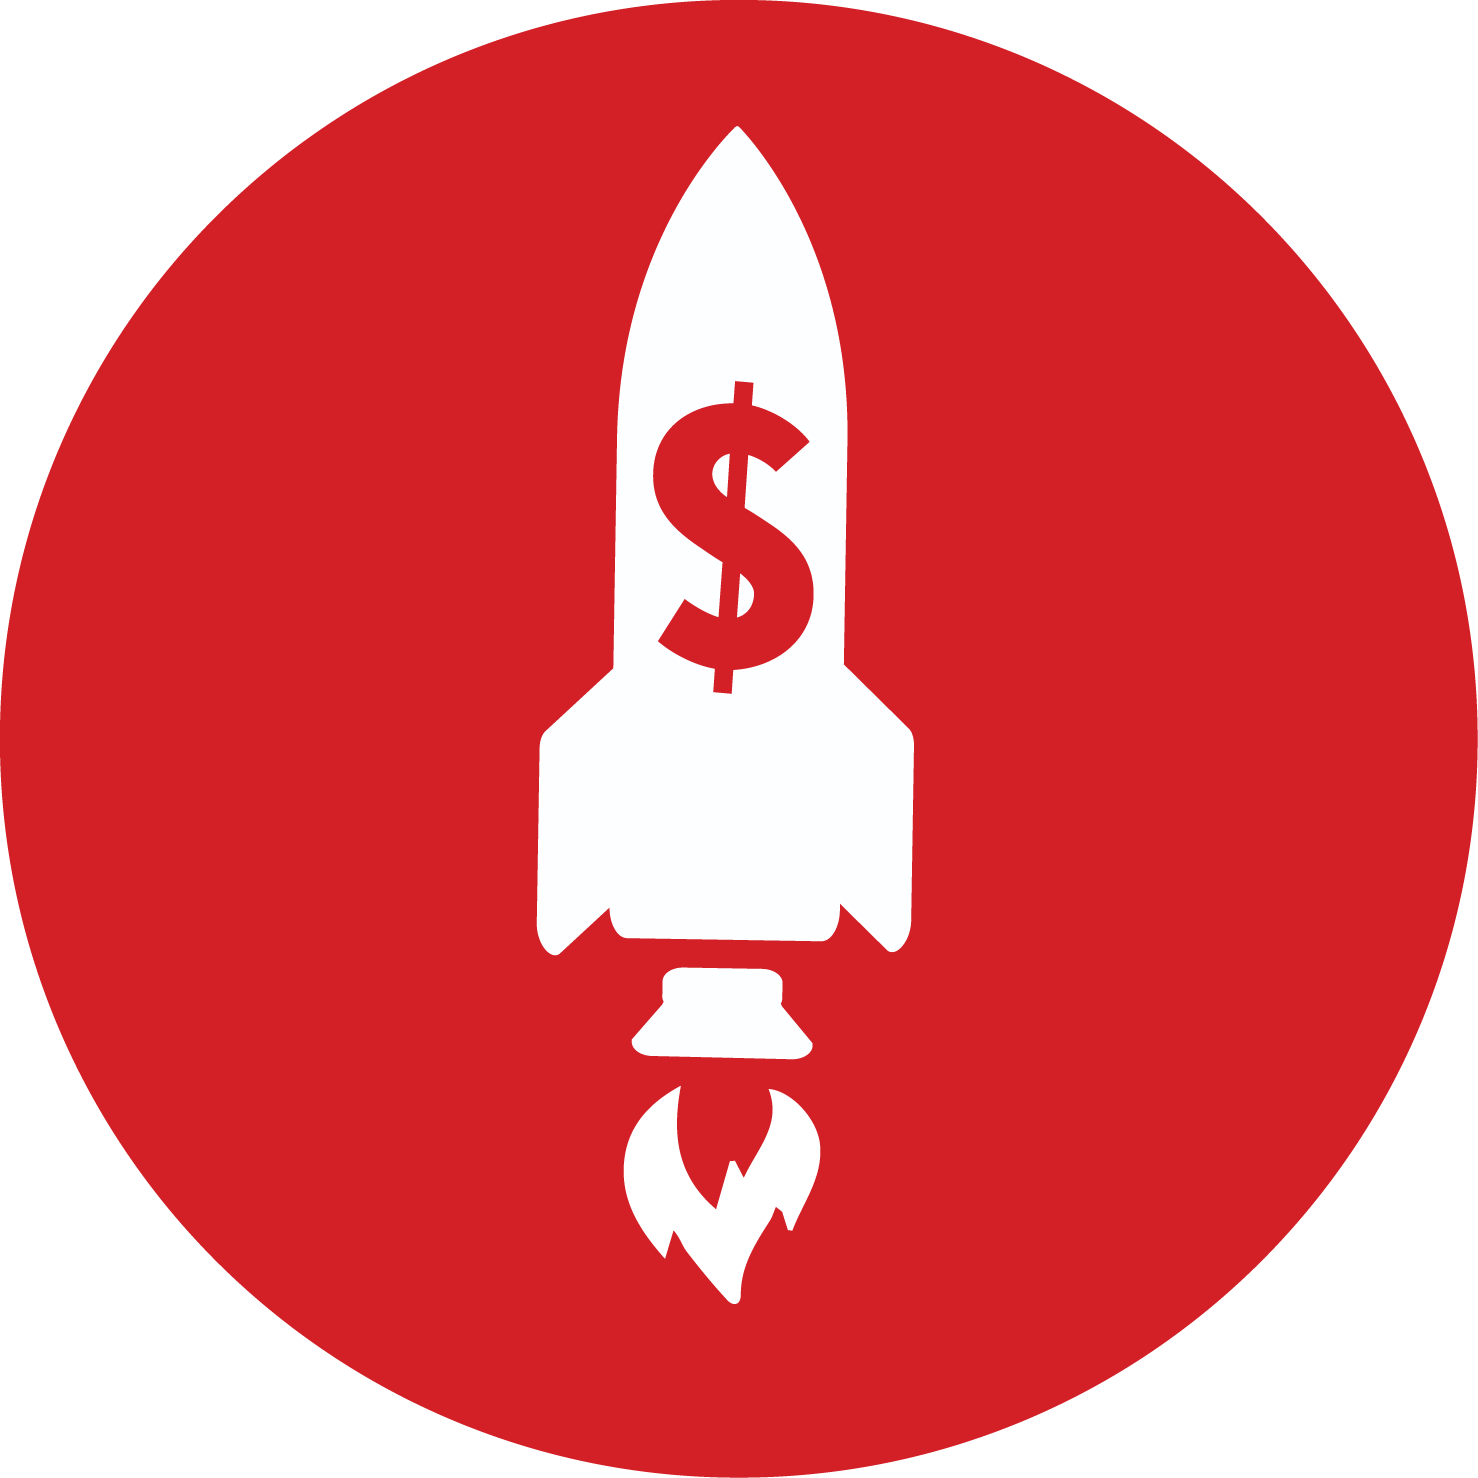 Rocketship with a dollar sign